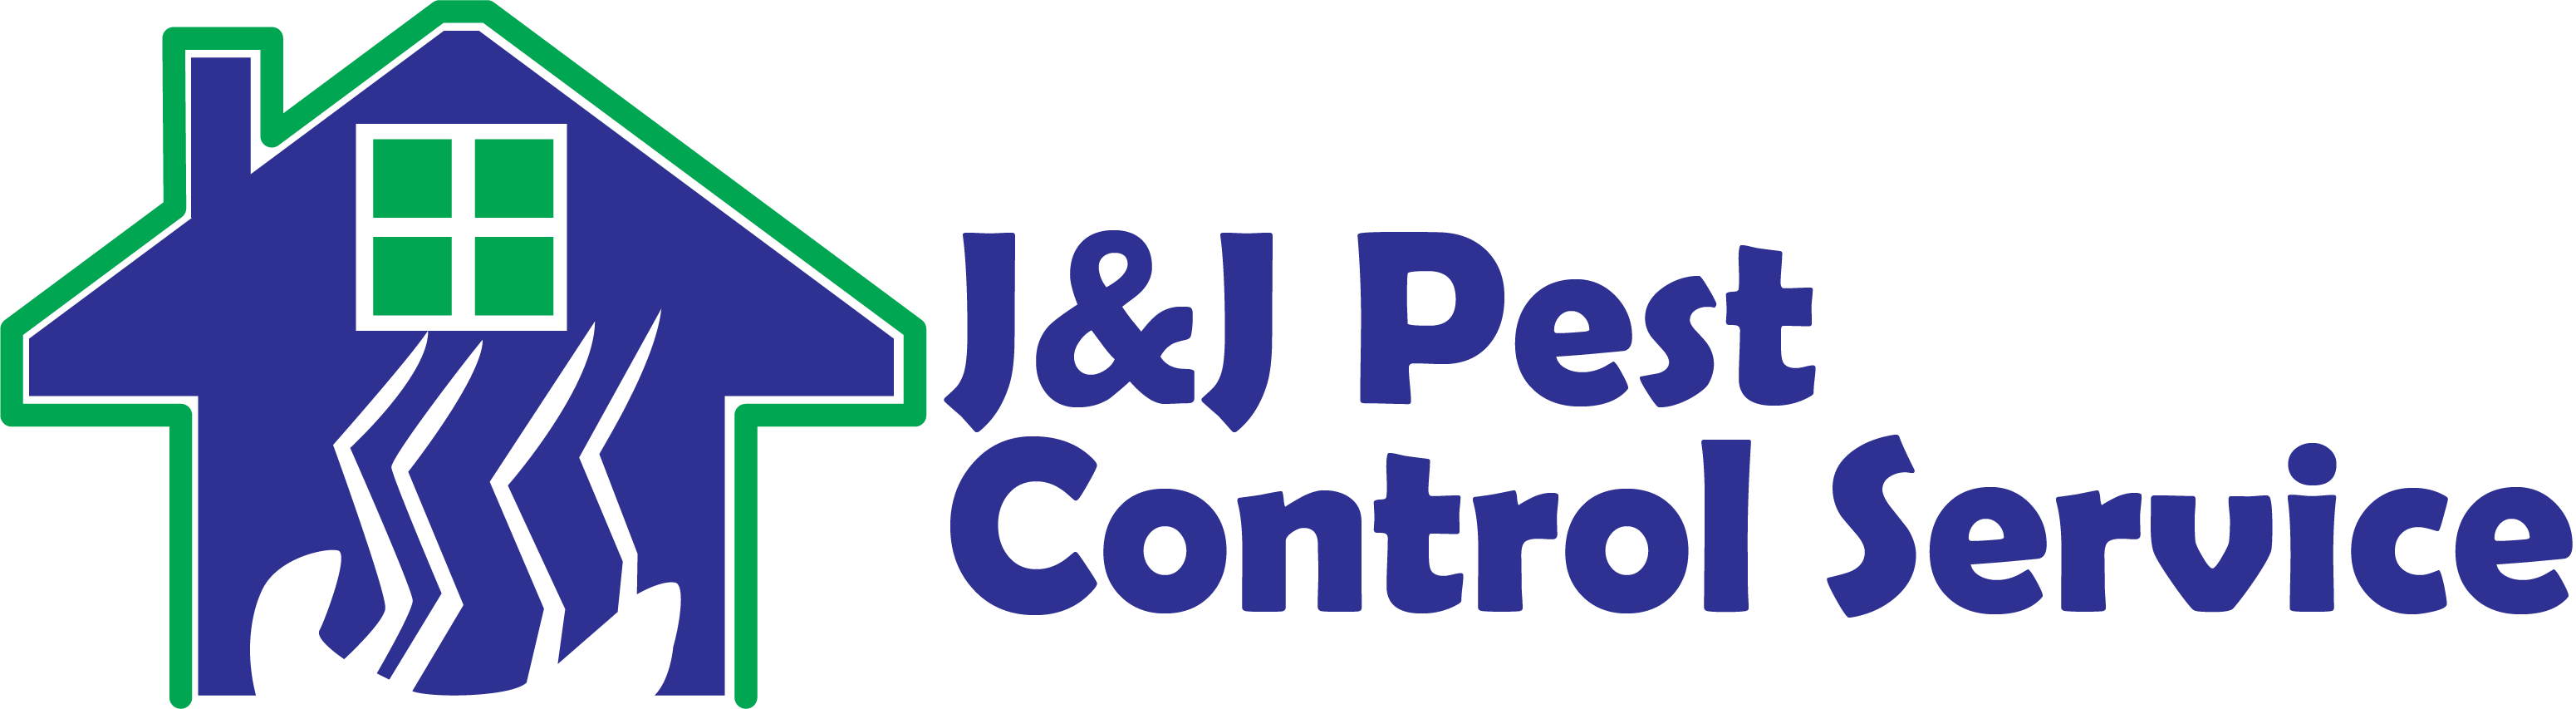 J&J Pest Control Service Logo